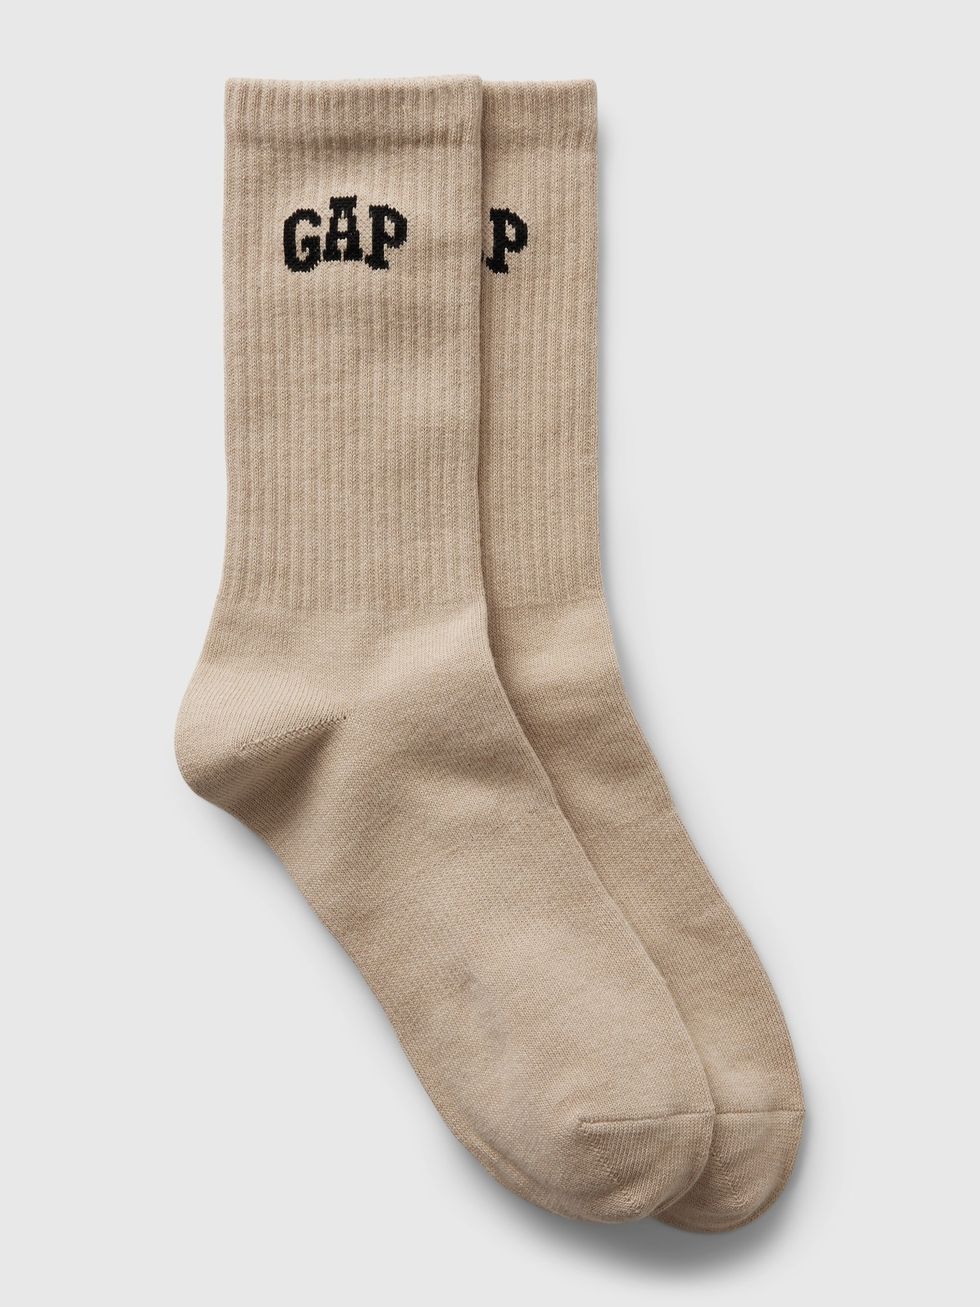 Gap Quarter Crew Socks